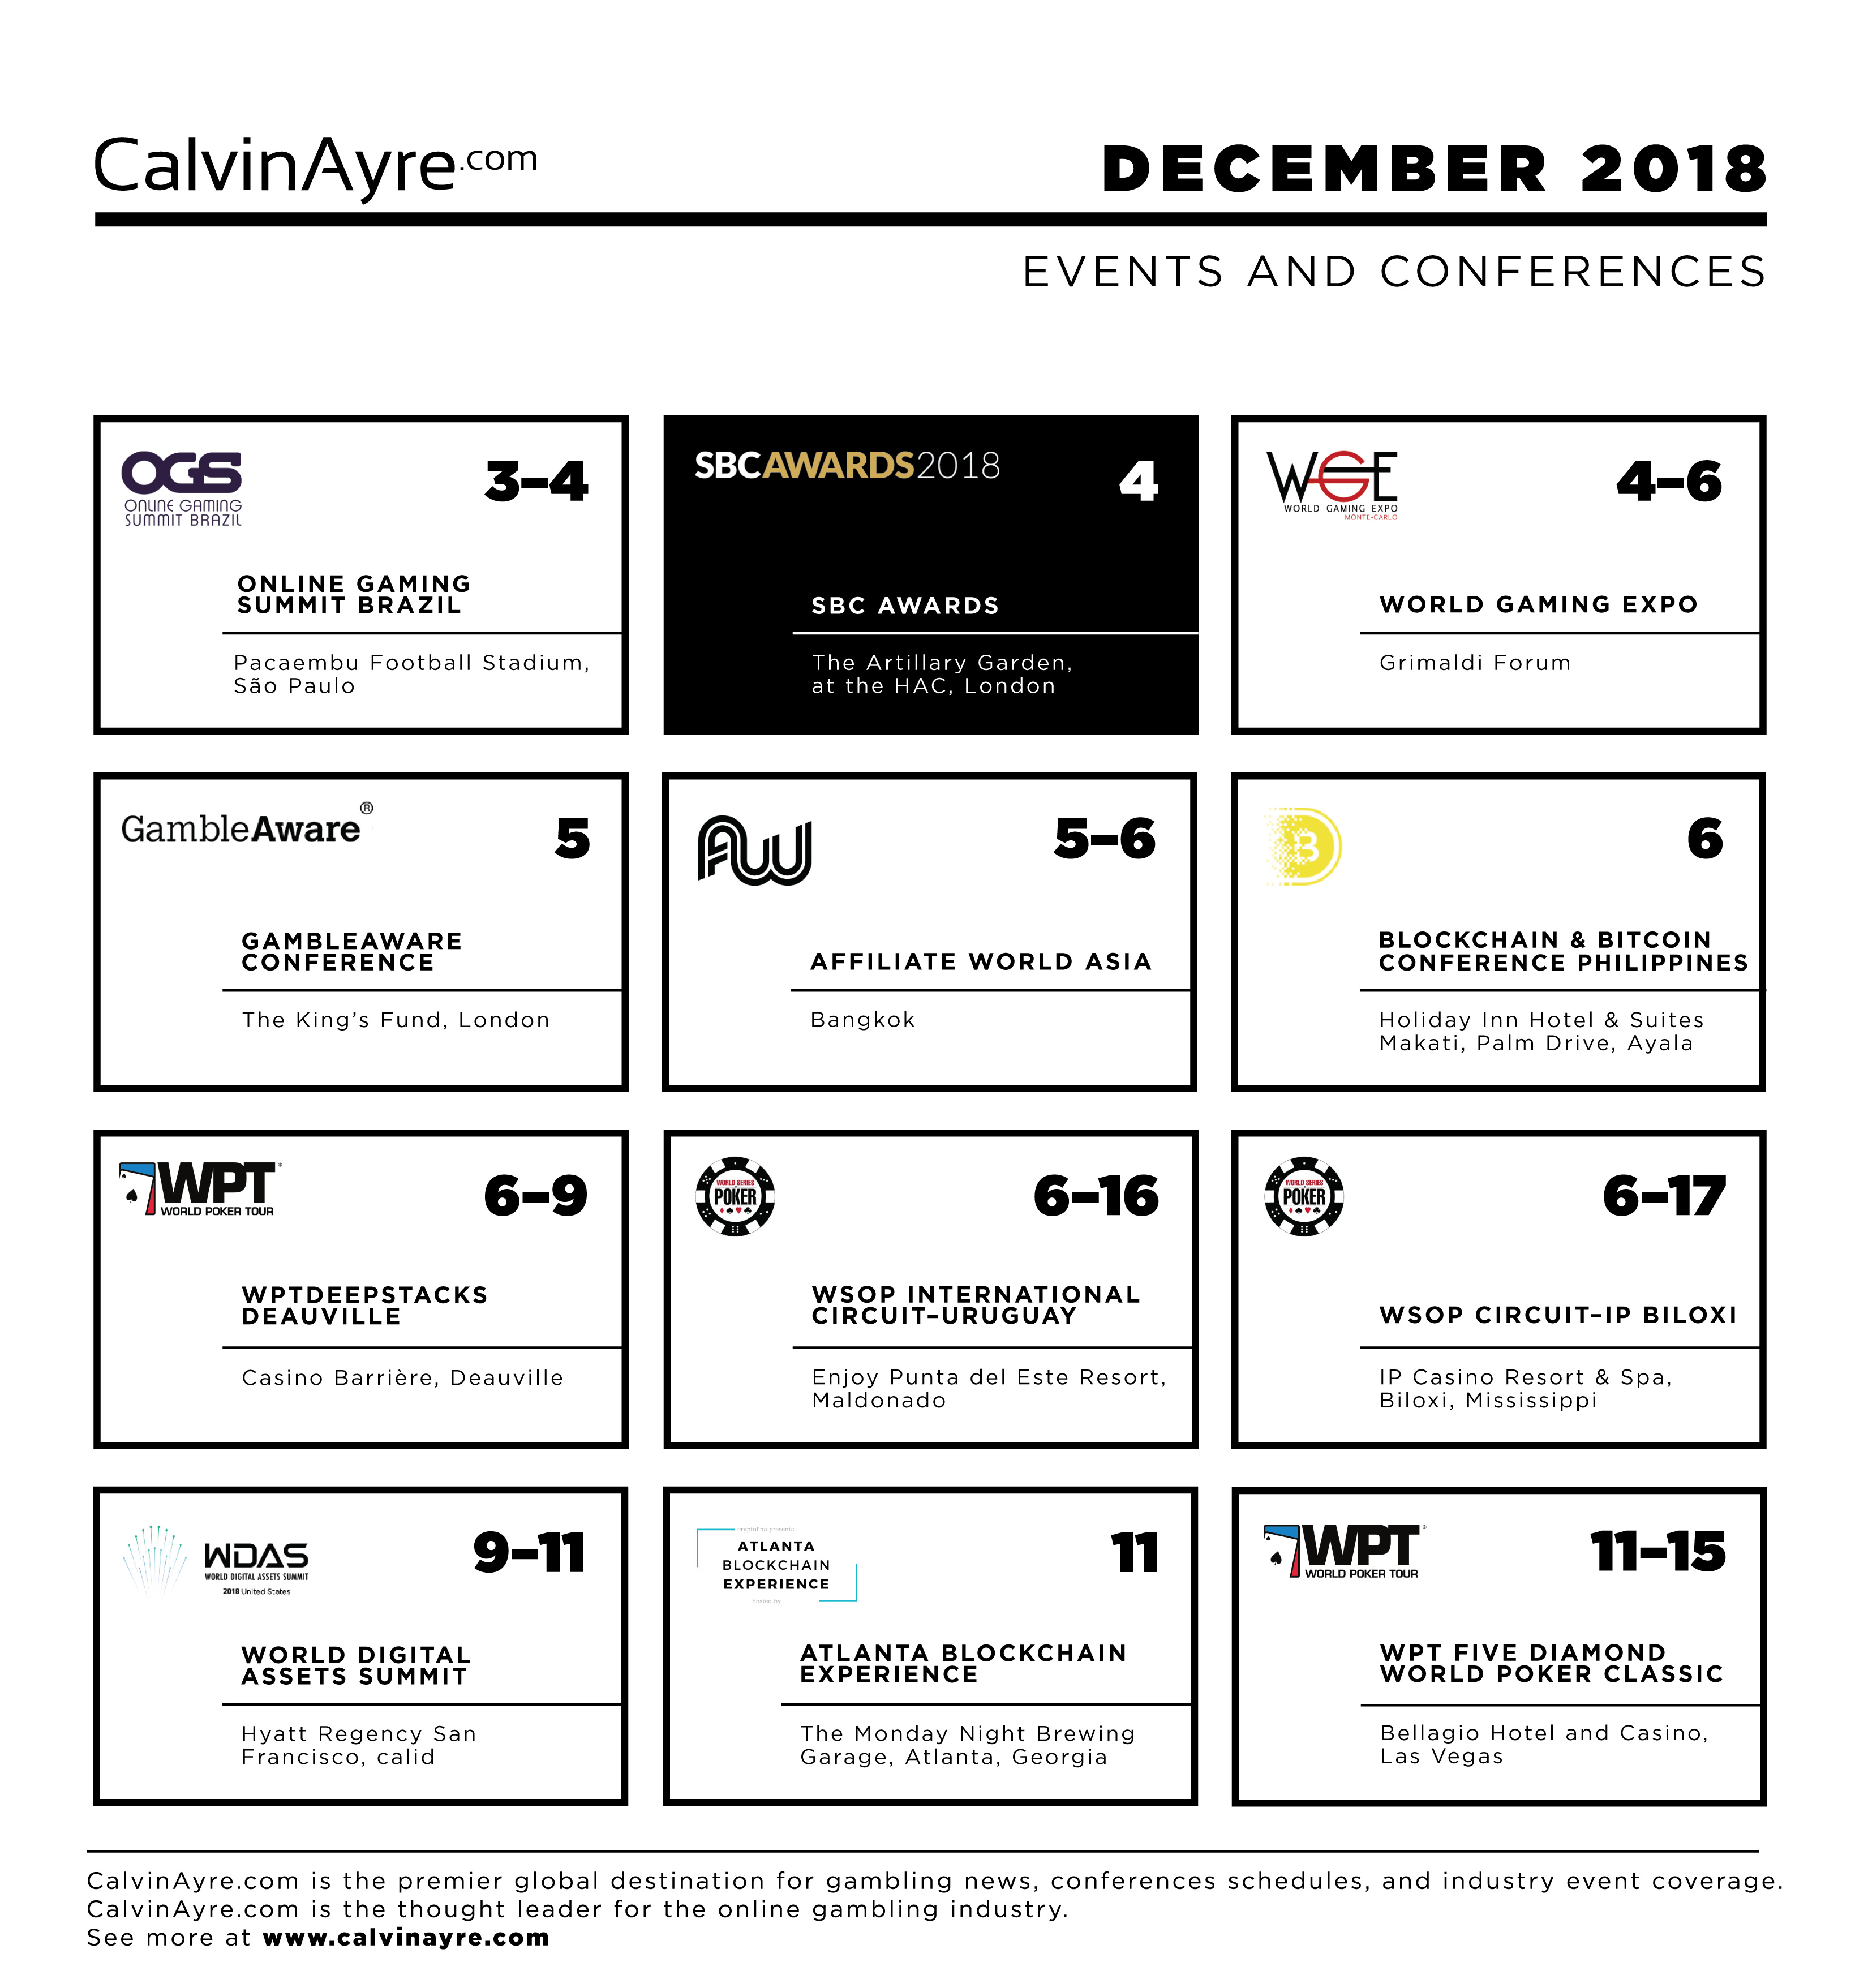 CalvinAyre.com December 2018 featured conferences & events